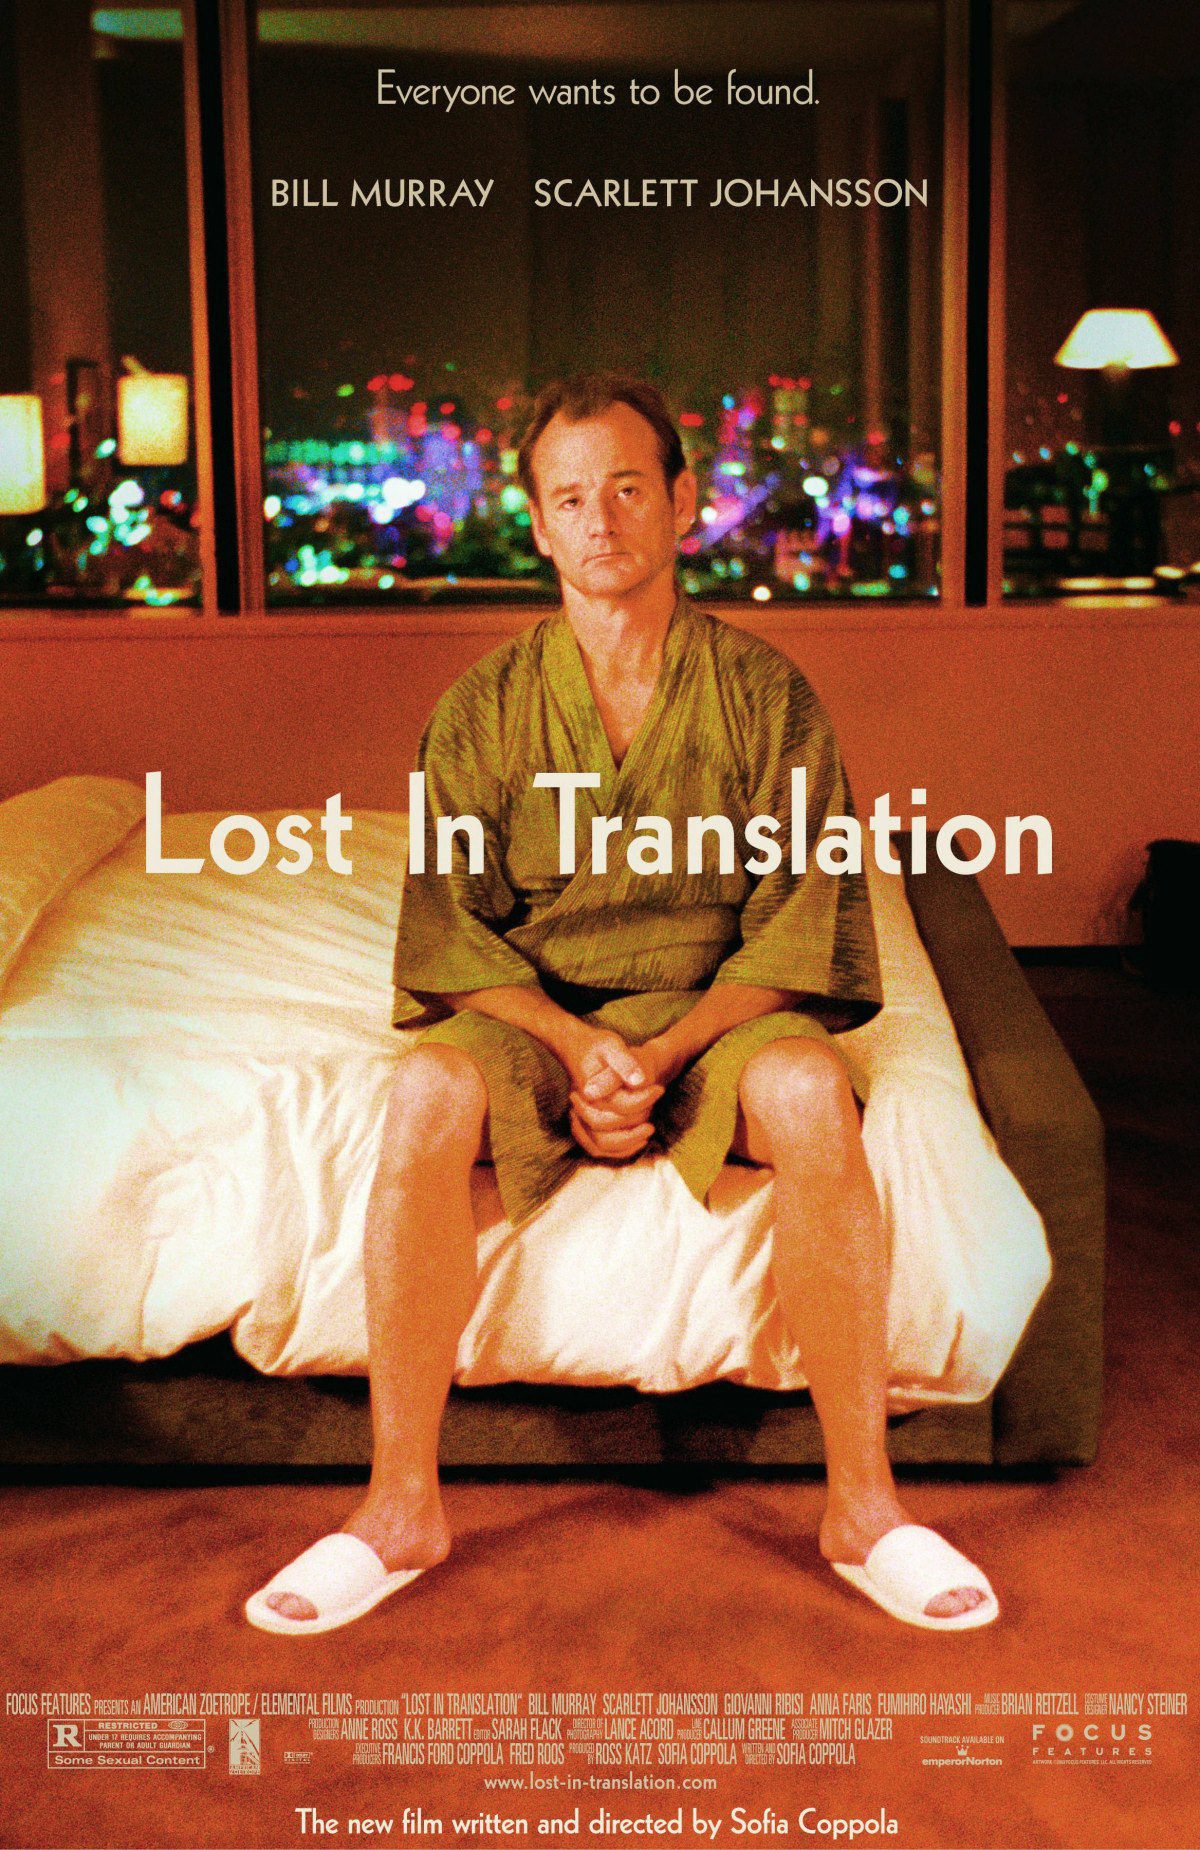 watch movie lost in translation streaming download free film voyage